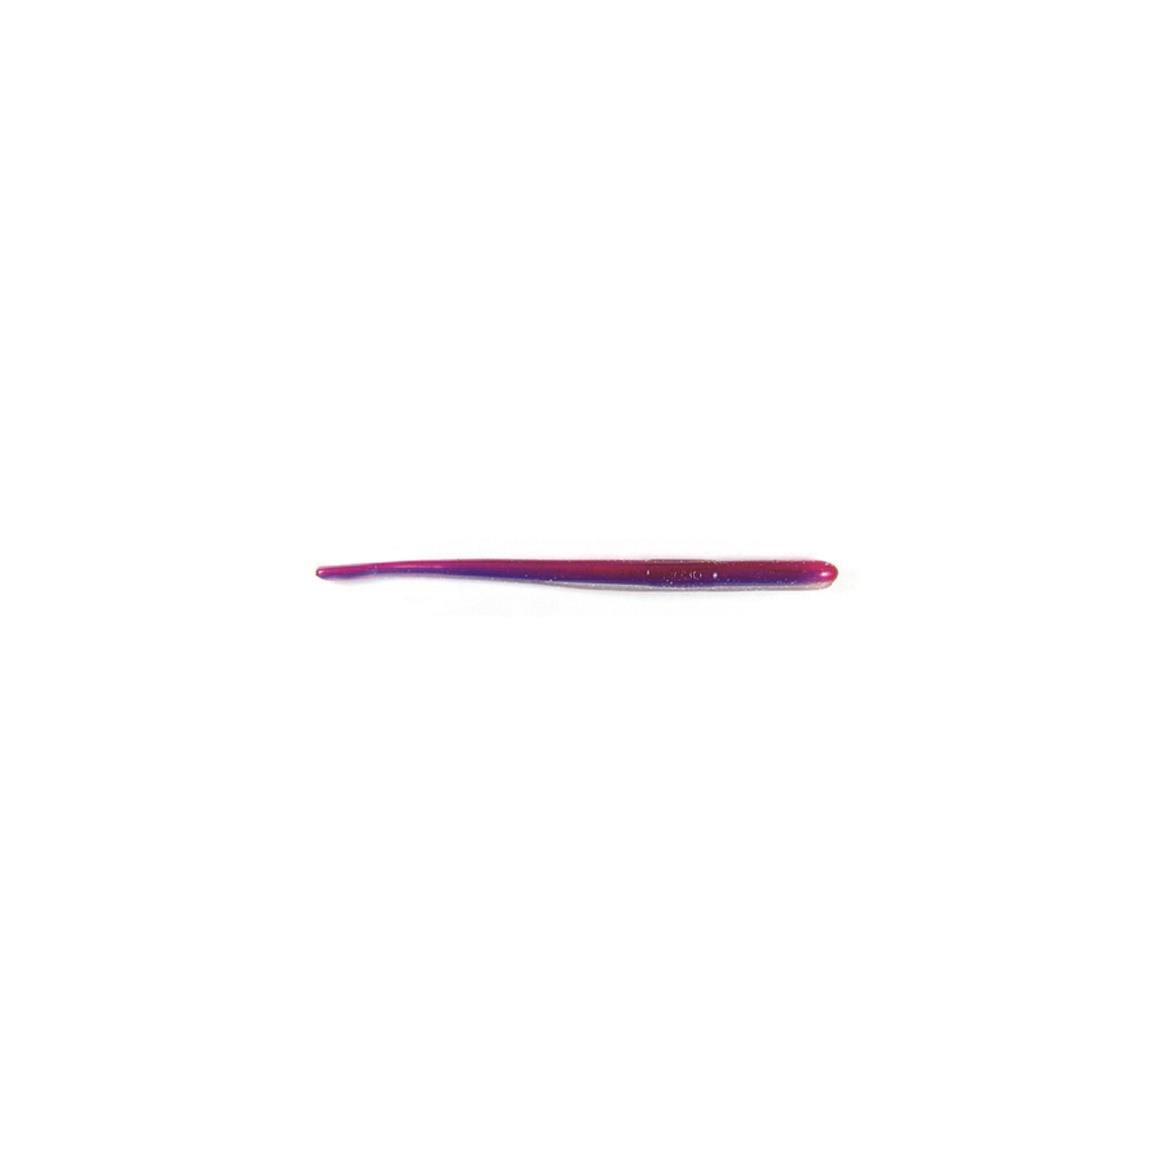 Roboworm 4.5” Straight Tail Worm 10pk. - Tackle Shack USA